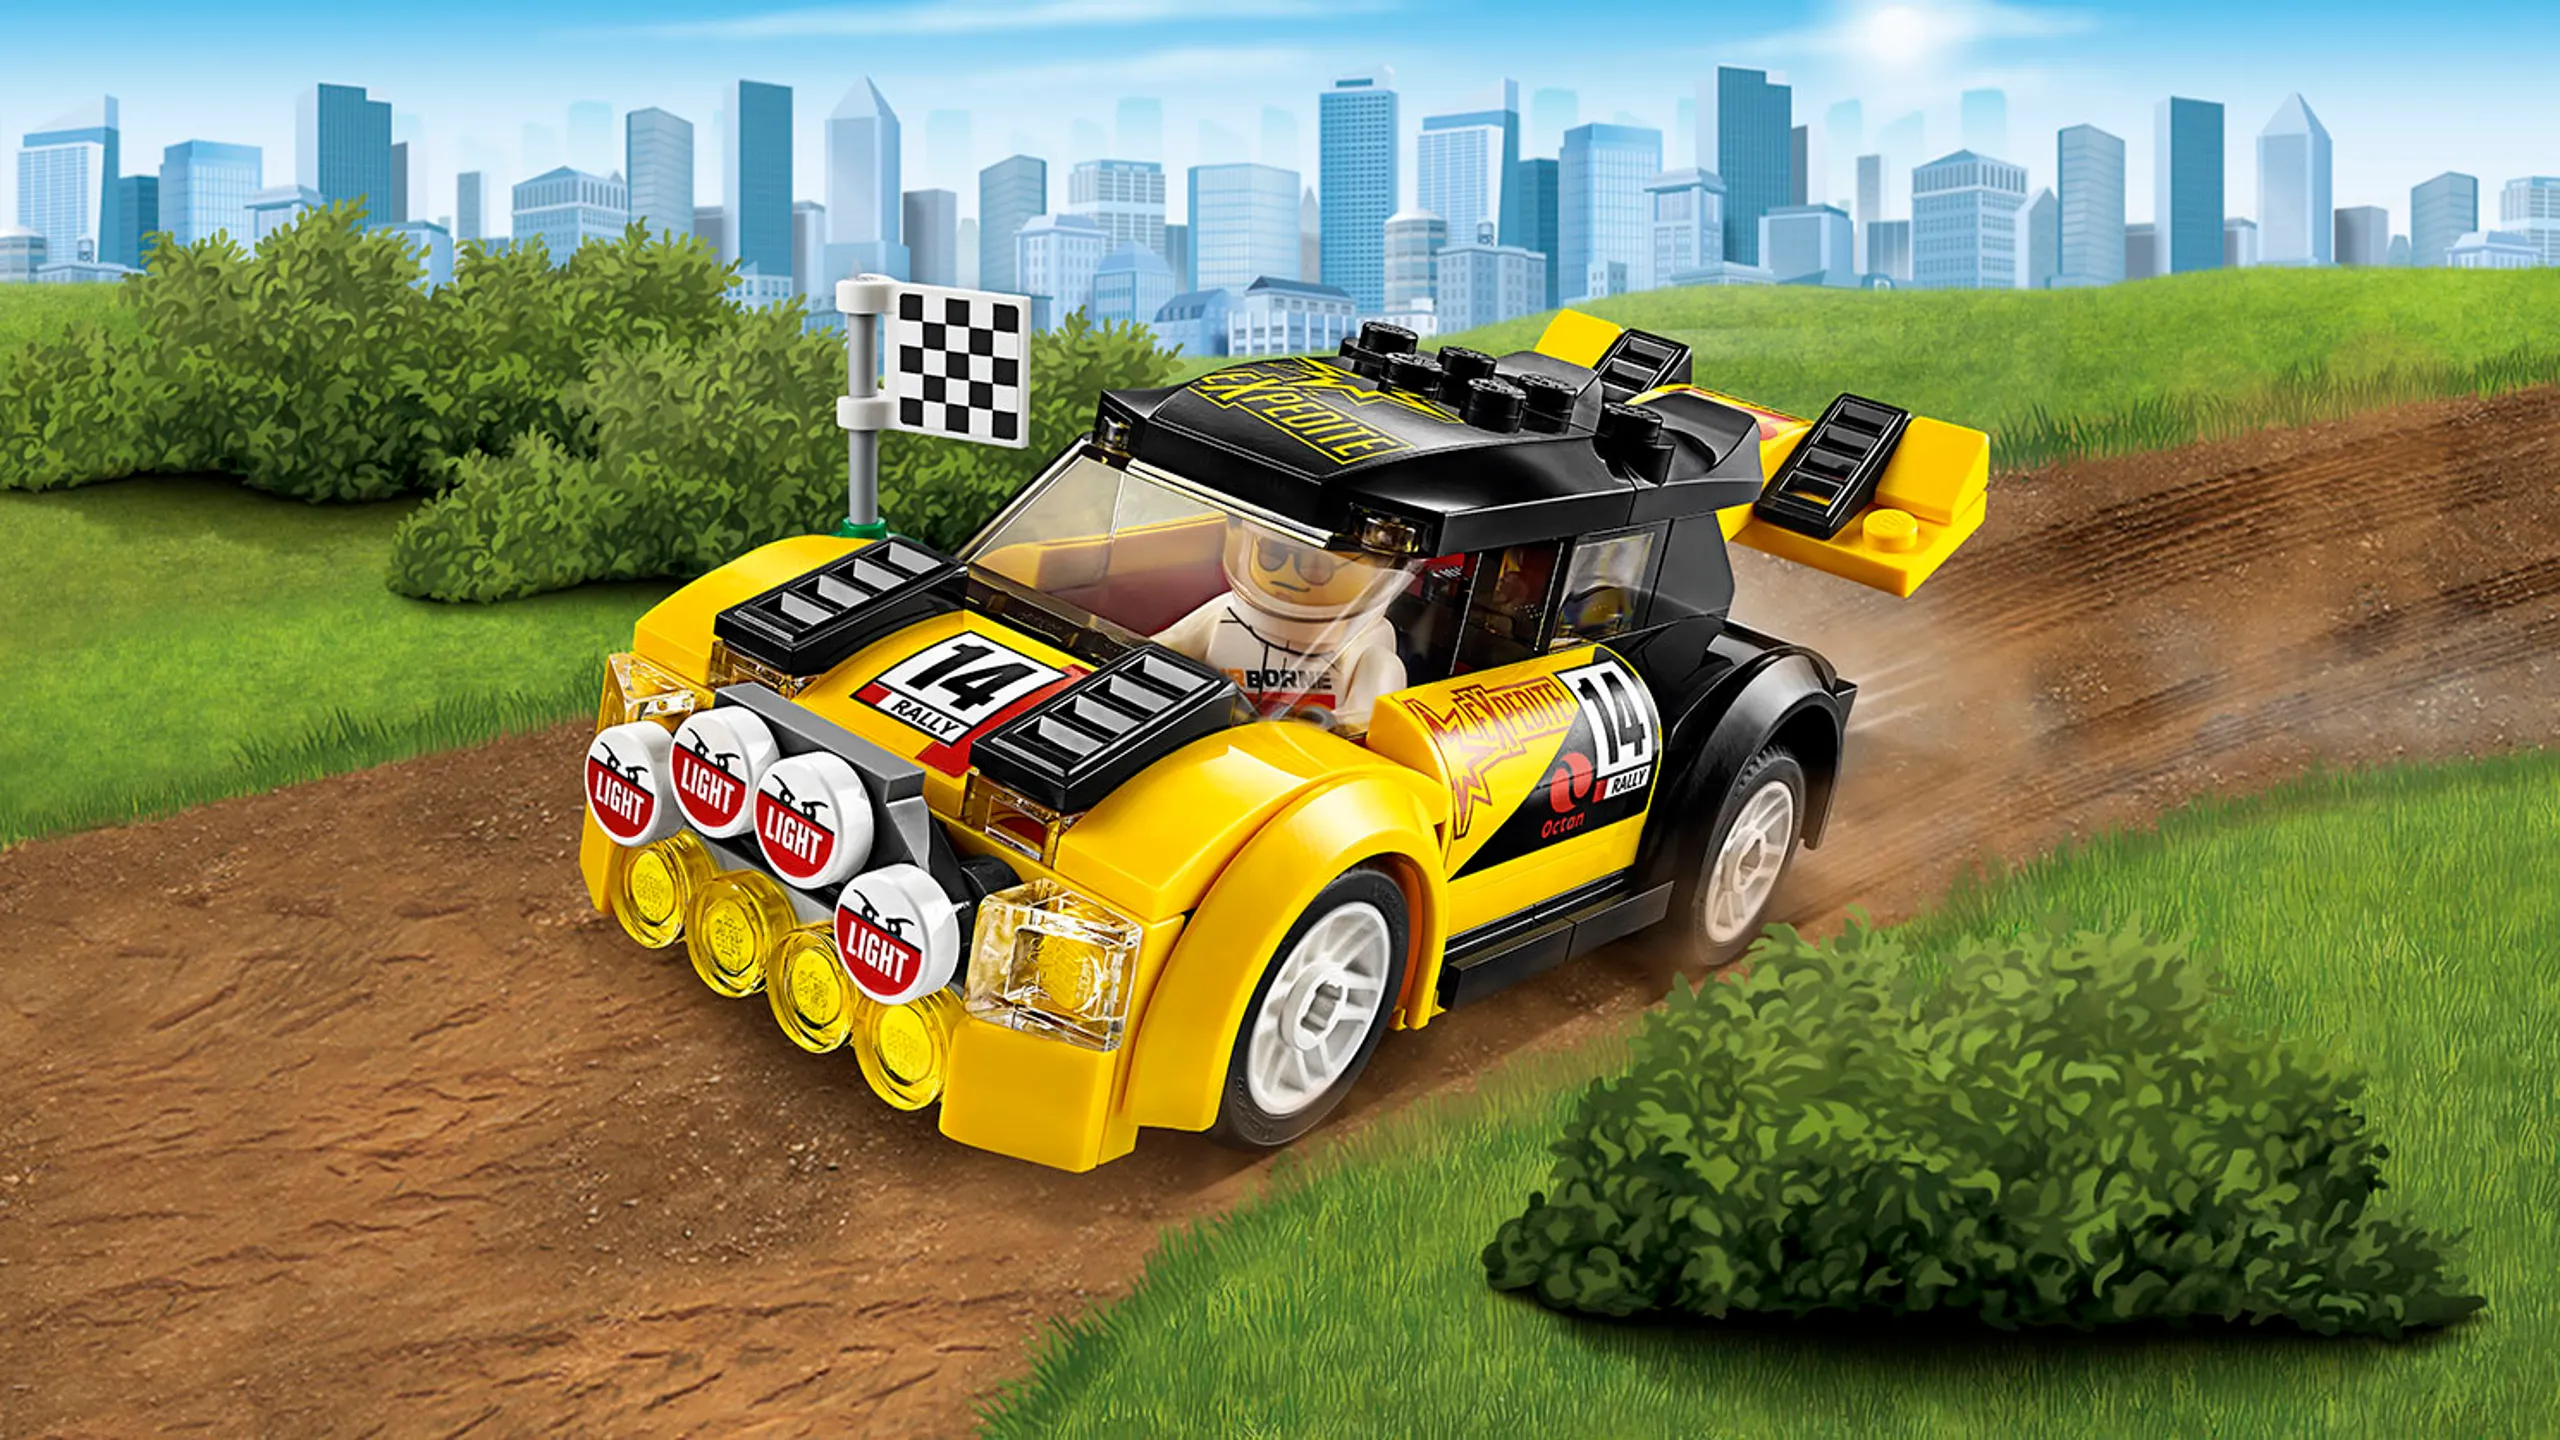 LEGO City Fantastiska fordon – Rallybil 60113